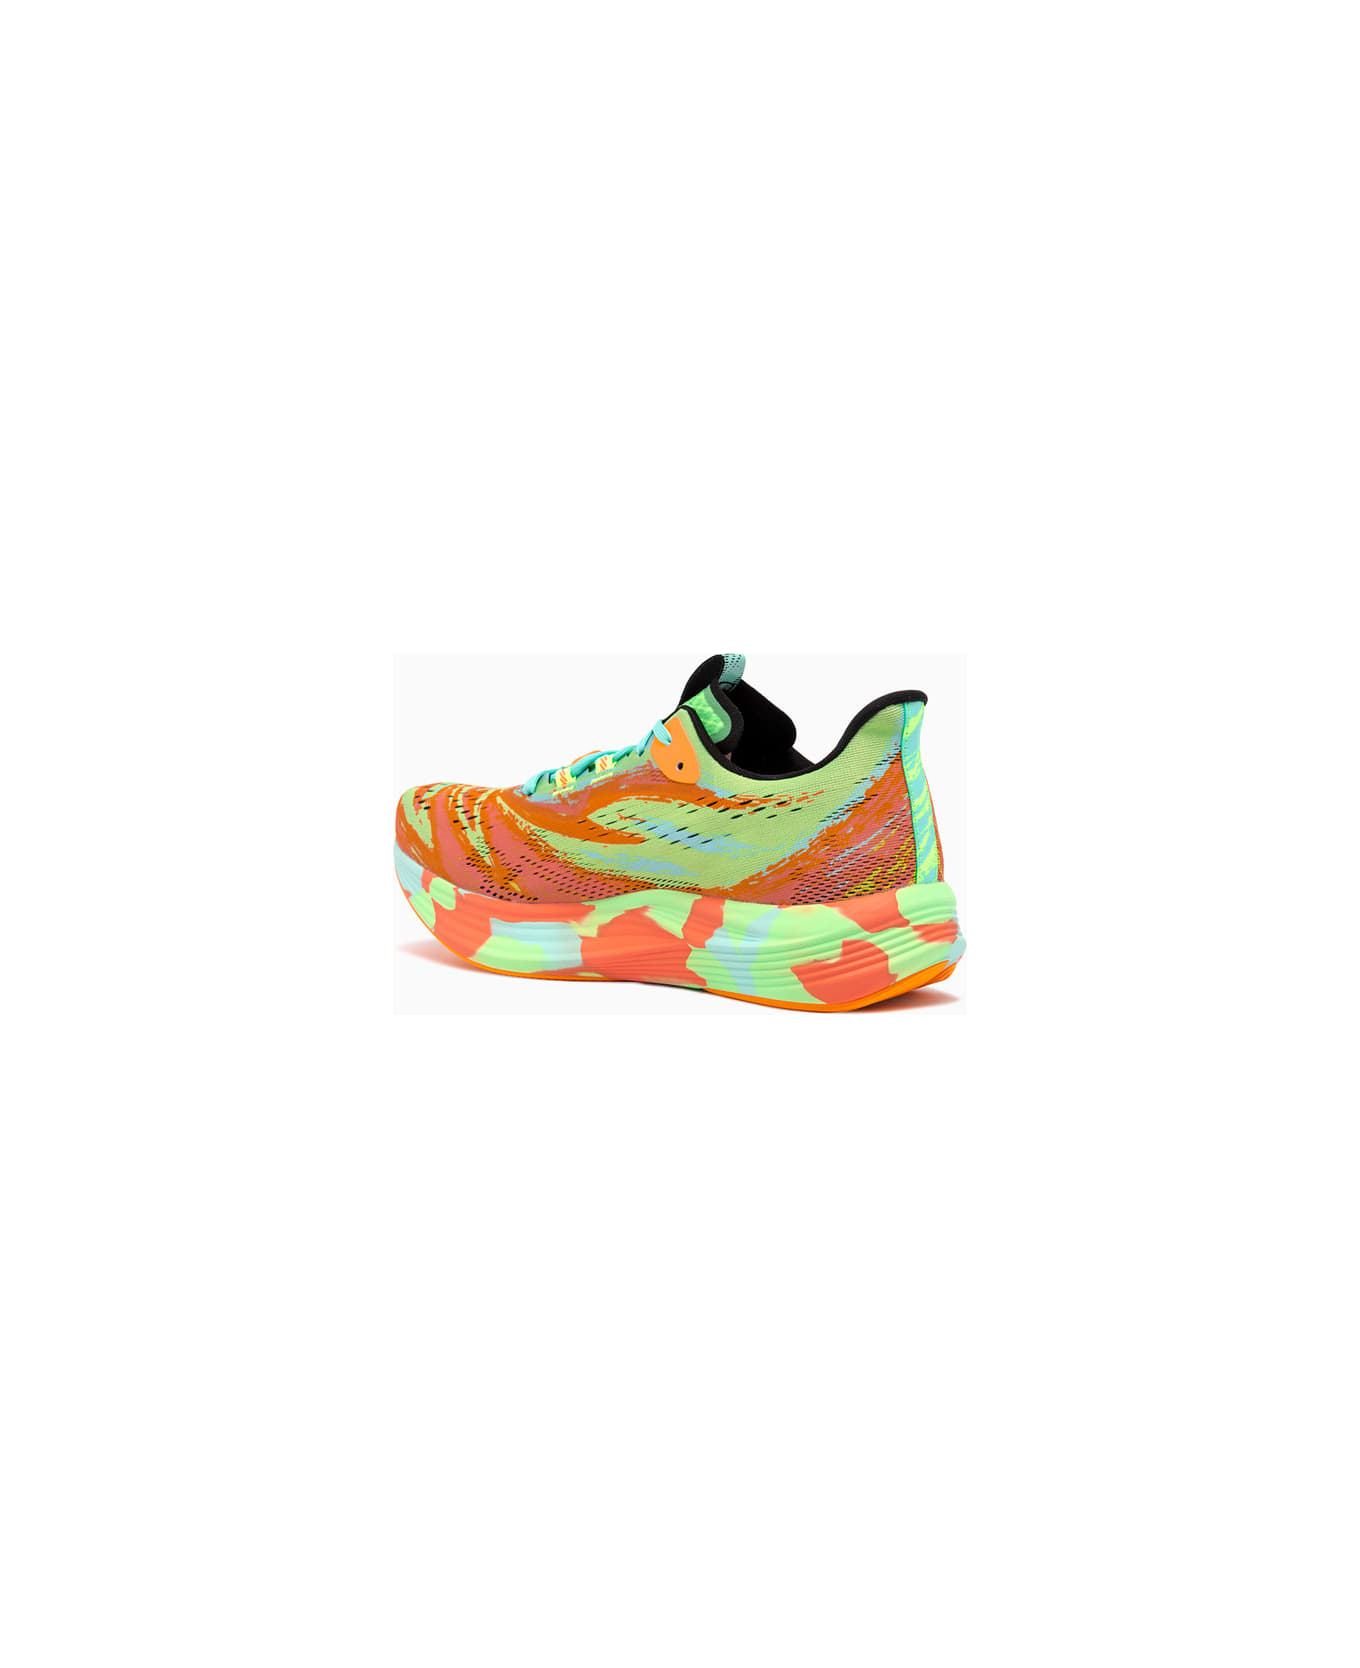 Asics Noosa Tri 15 Sneakers 1011b609-301 - Lime Burst/illuminate Mint